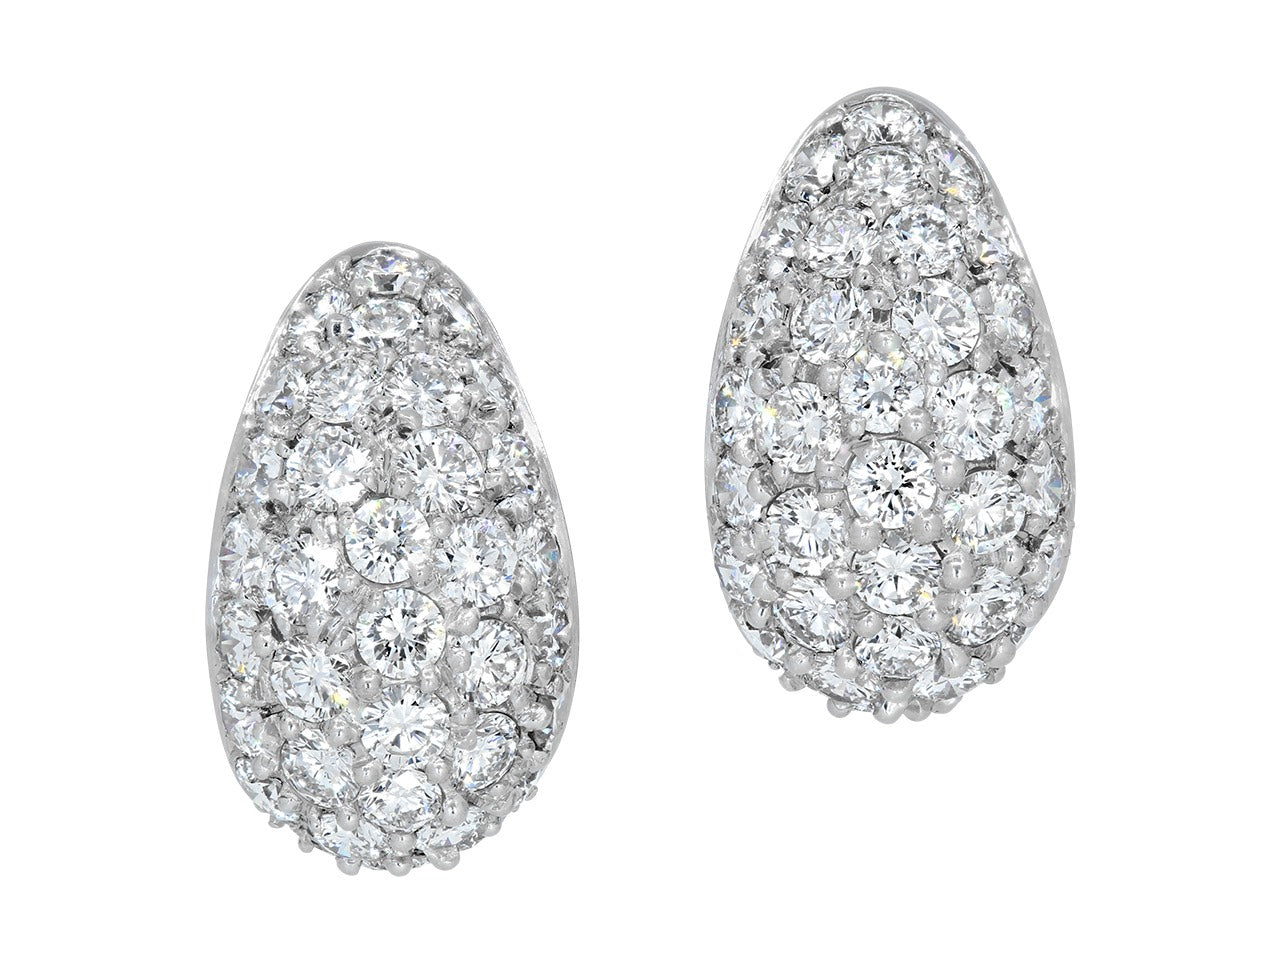 Tallarico Diamond Earrings in 18K White Gold